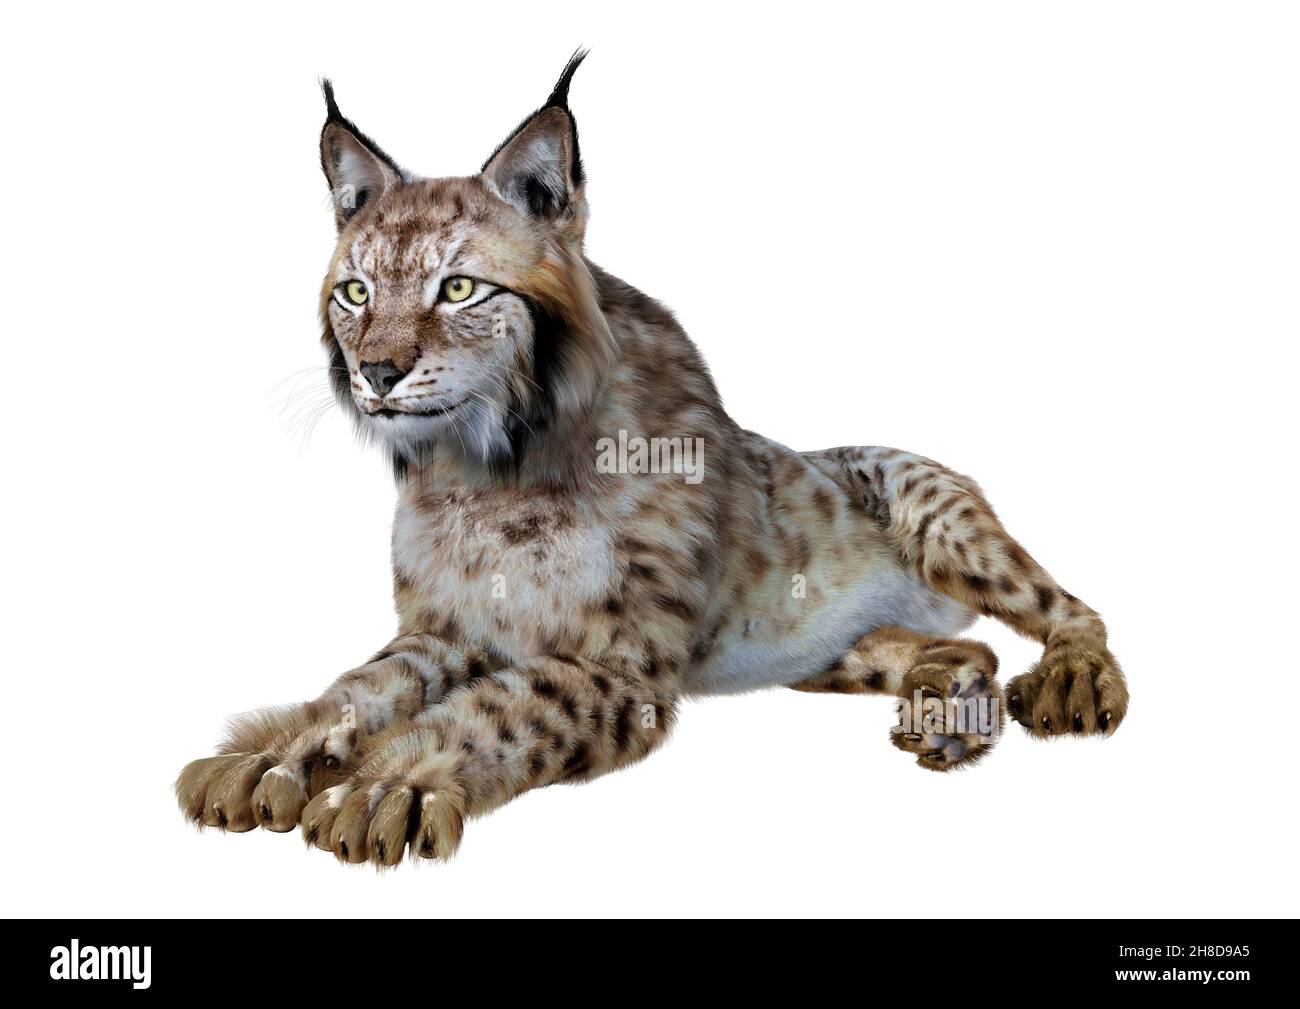 35,361 Lynx Cat Images, Stock Photos, 3D objects, & Vectors